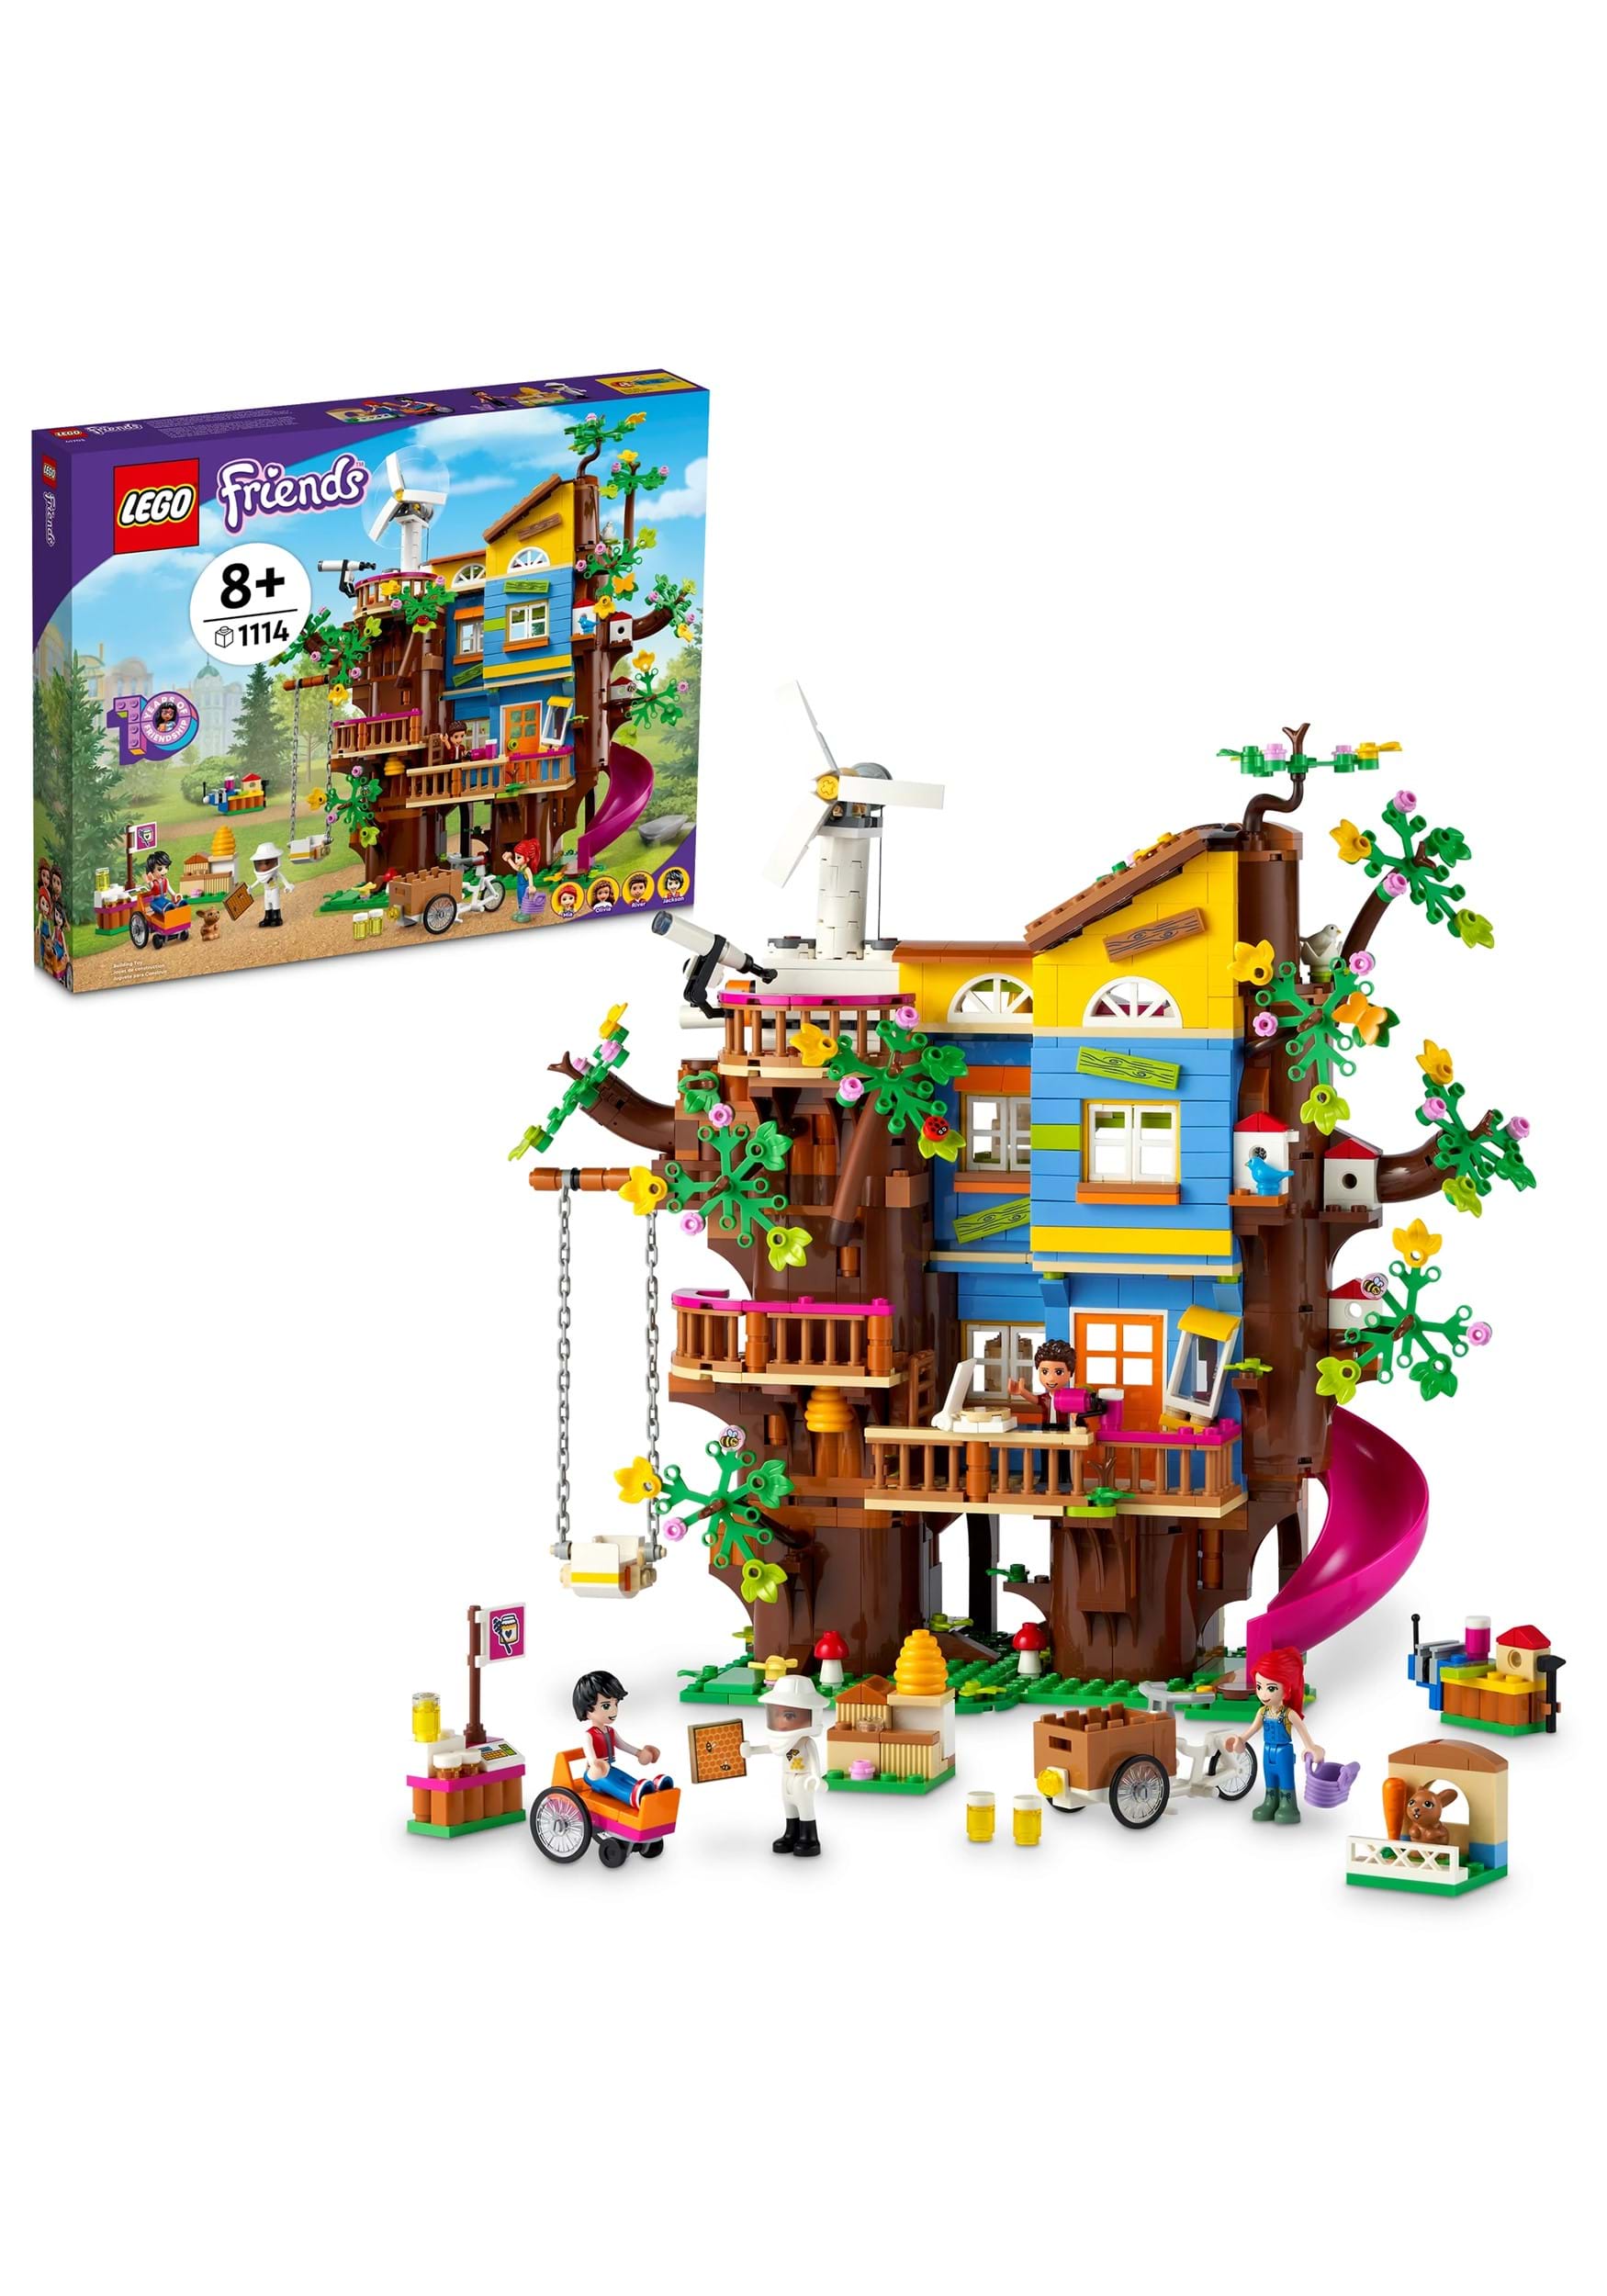 LEGO Friends Friendship Tree House Set